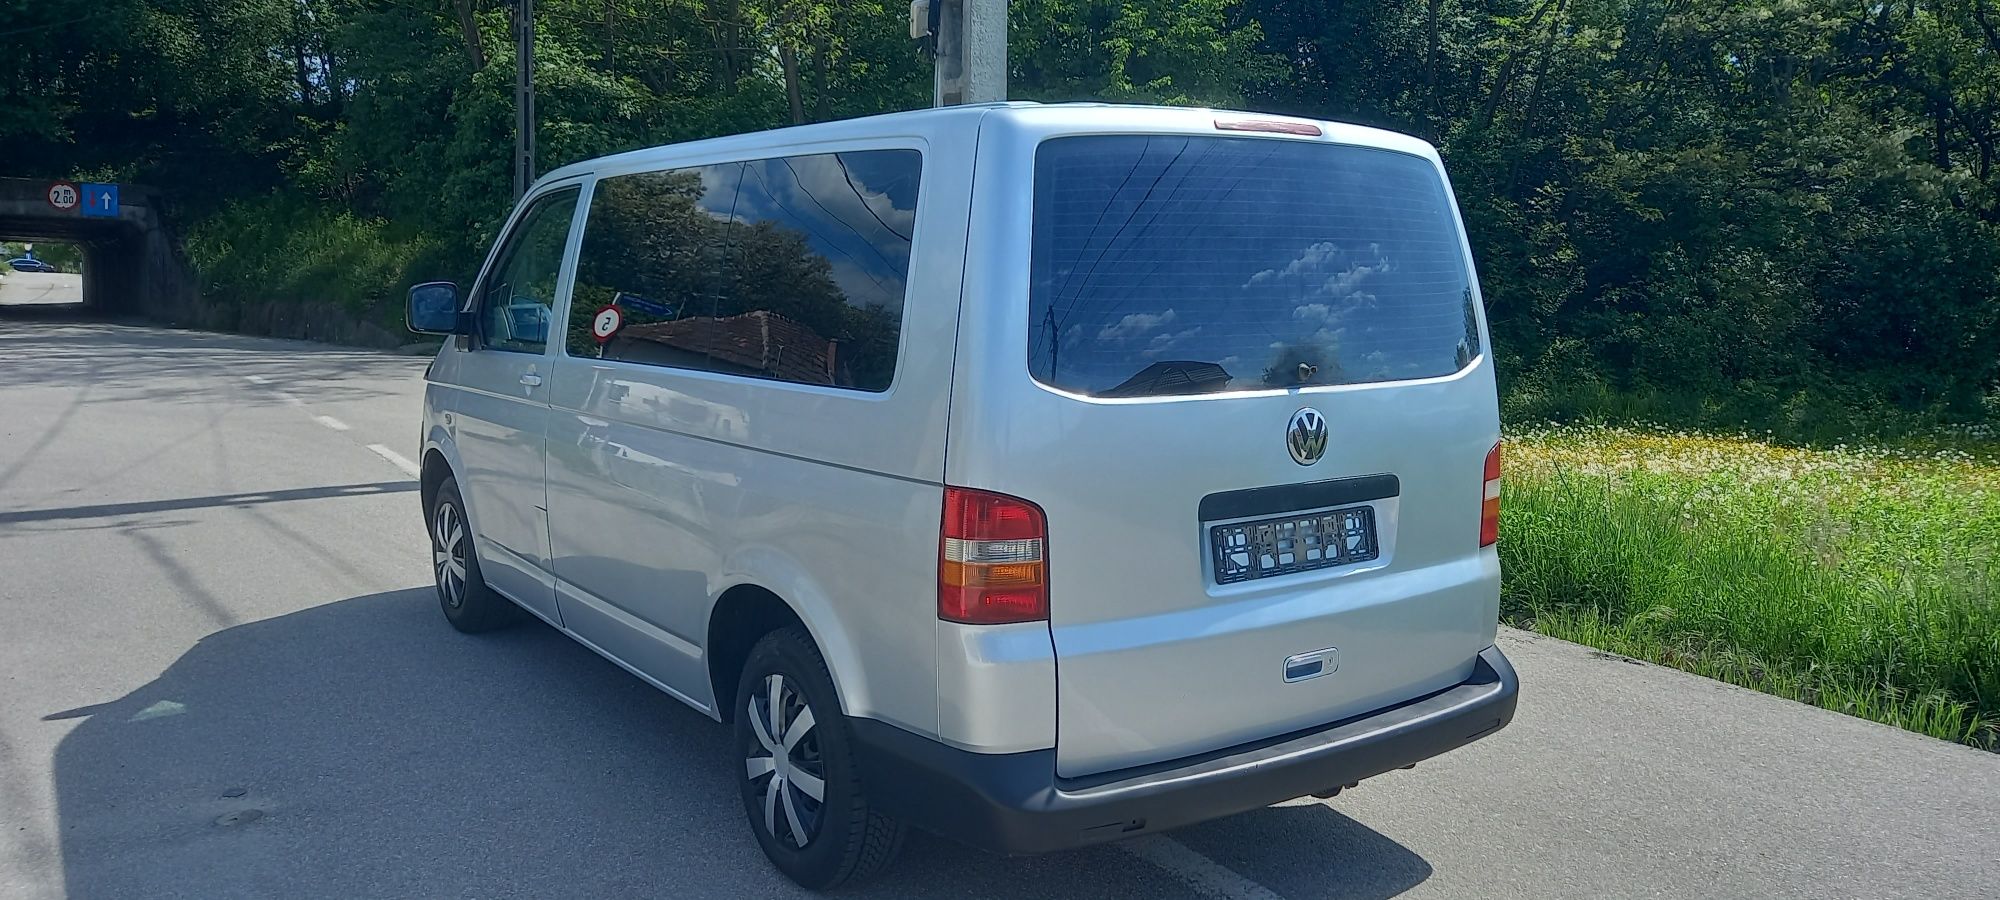 Volkswagen Transporter 1.9Diesel 8+1locuri adus recent